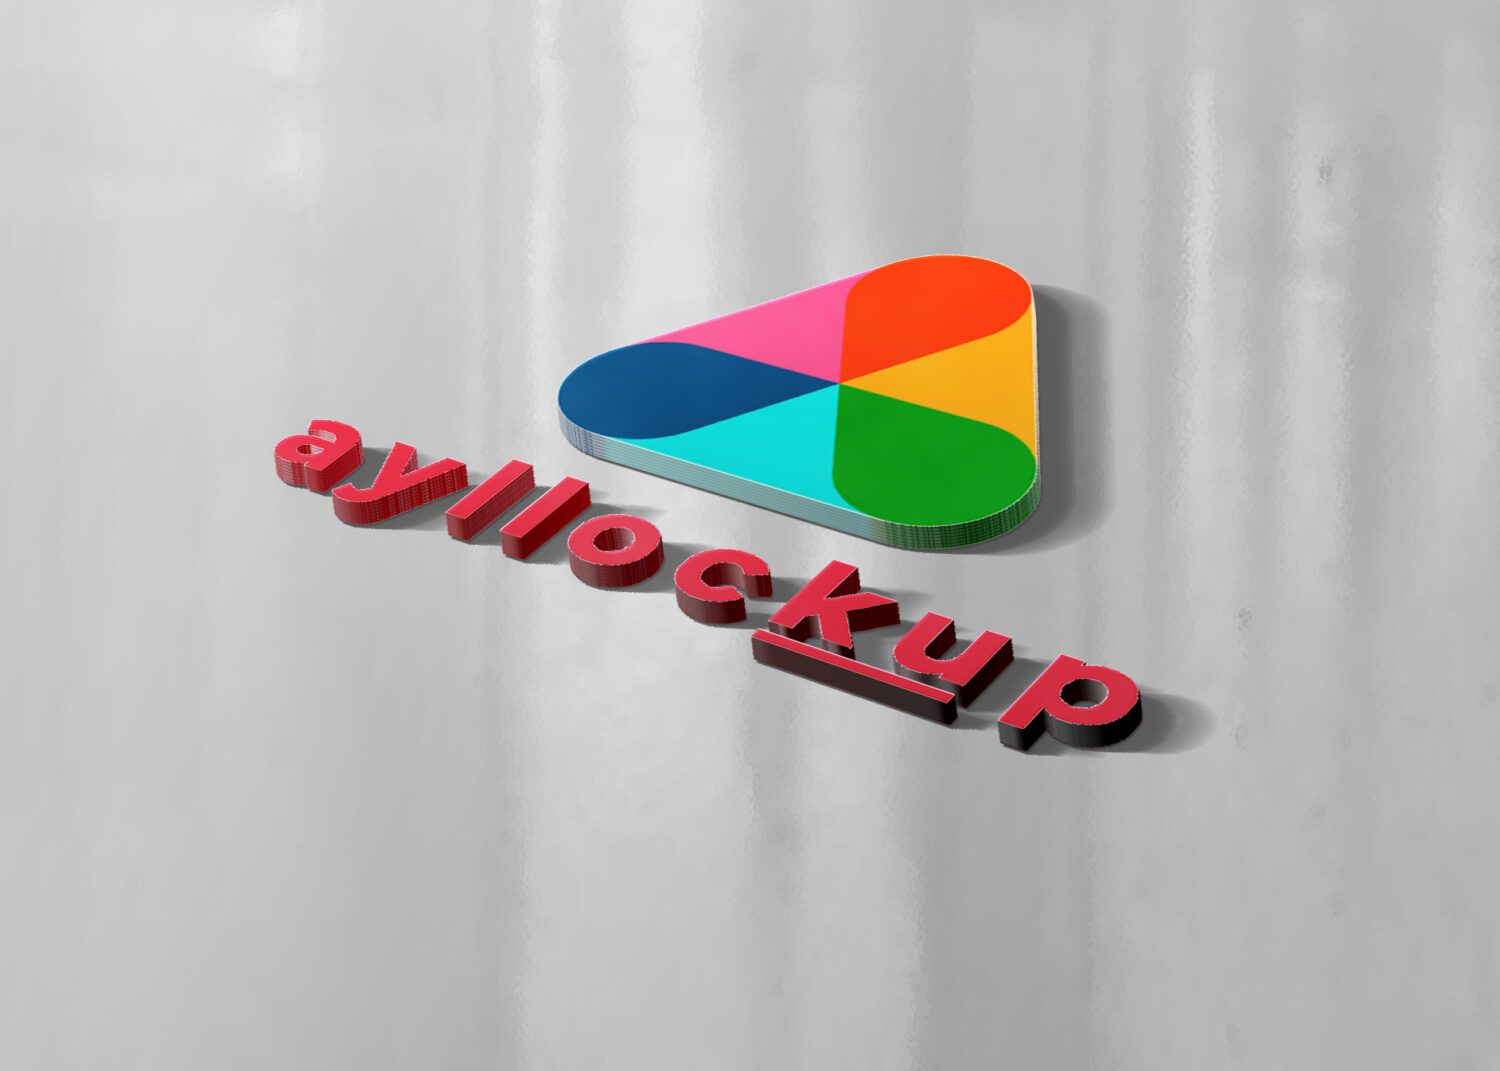 3D Logo Mockup 2020